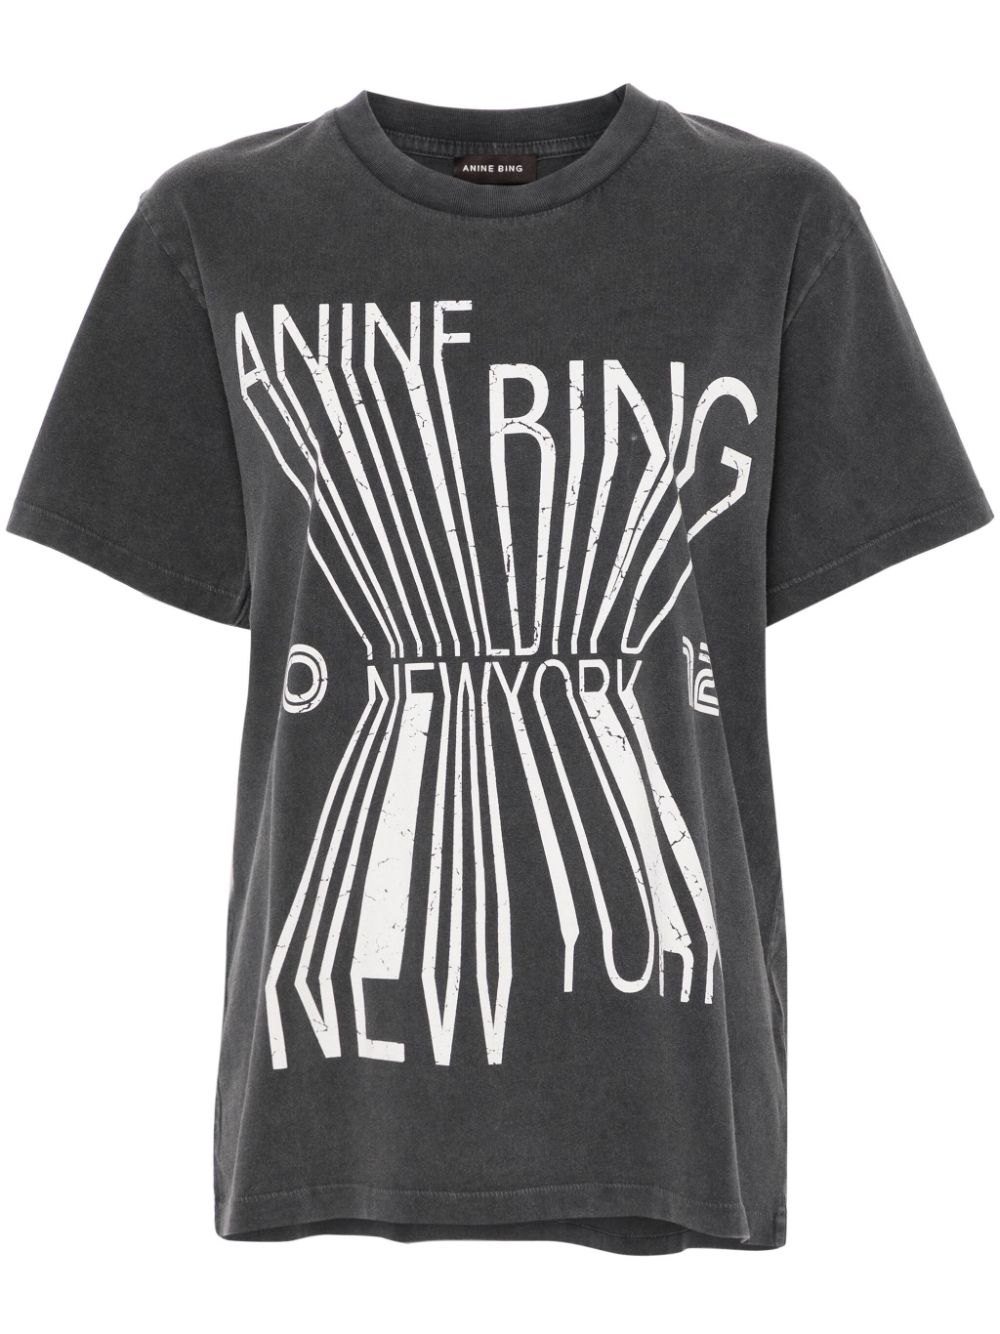 ANINE BING Colby Bing New York T-shirt - Grey von ANINE BING